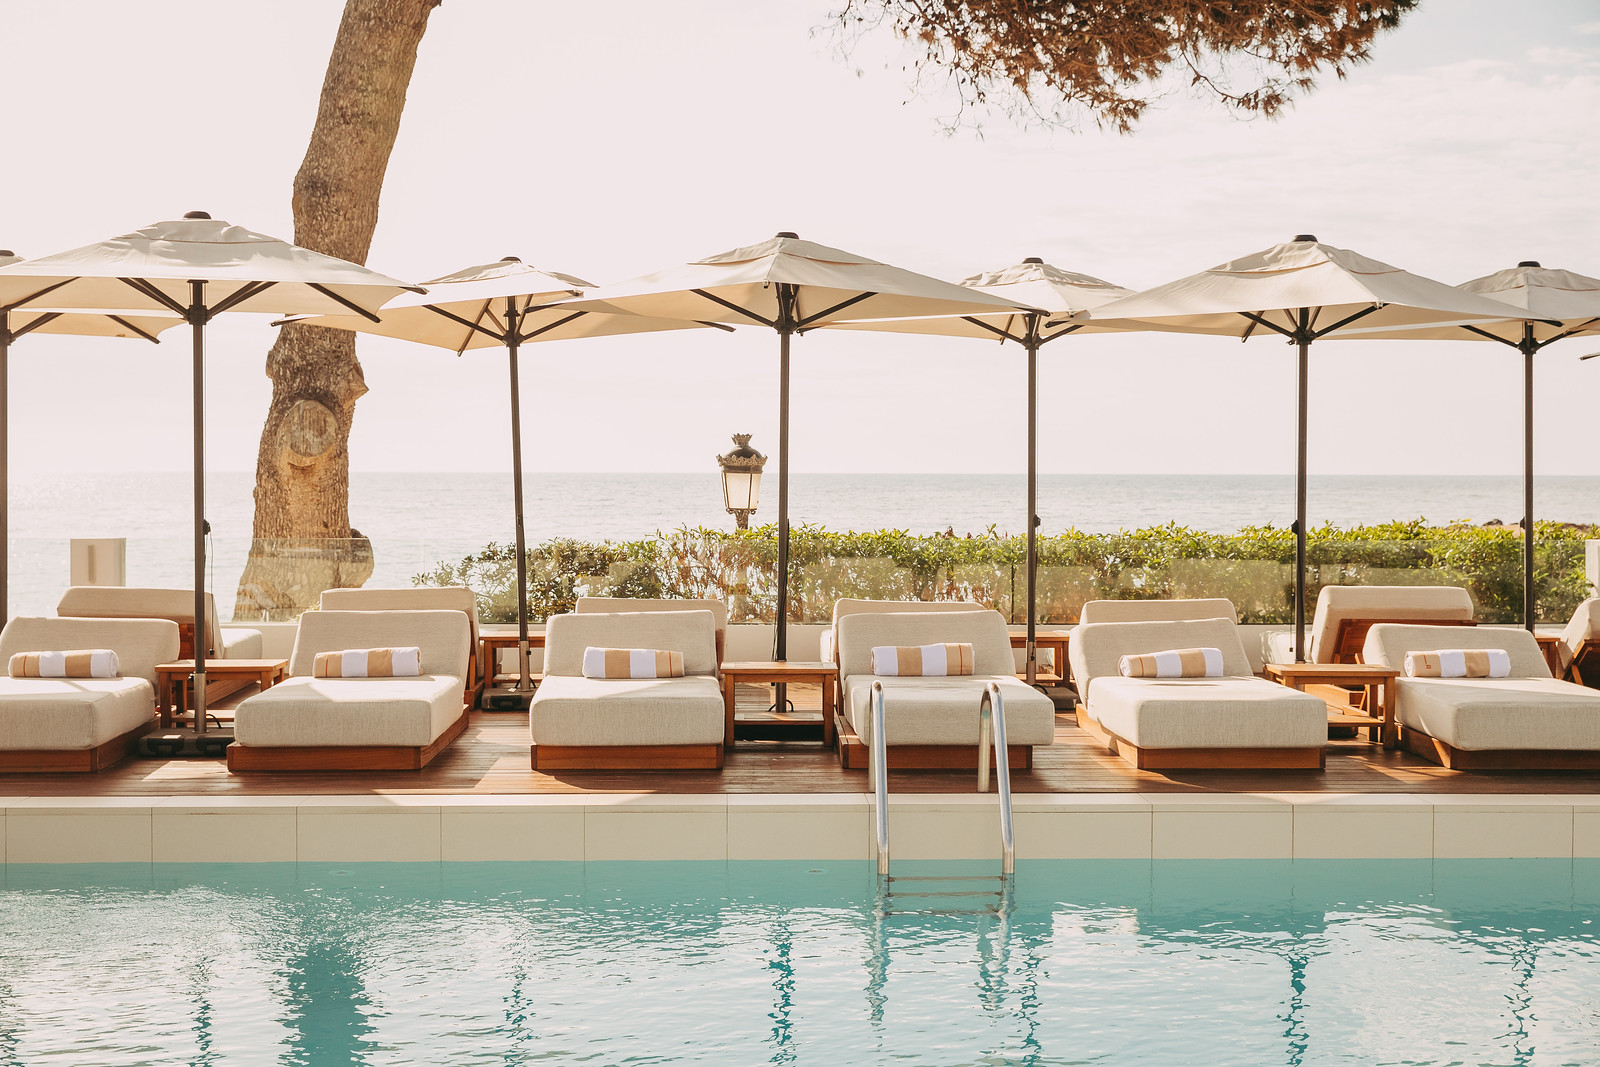 Where the river meets the sea – Hotel Riomar Ibiza